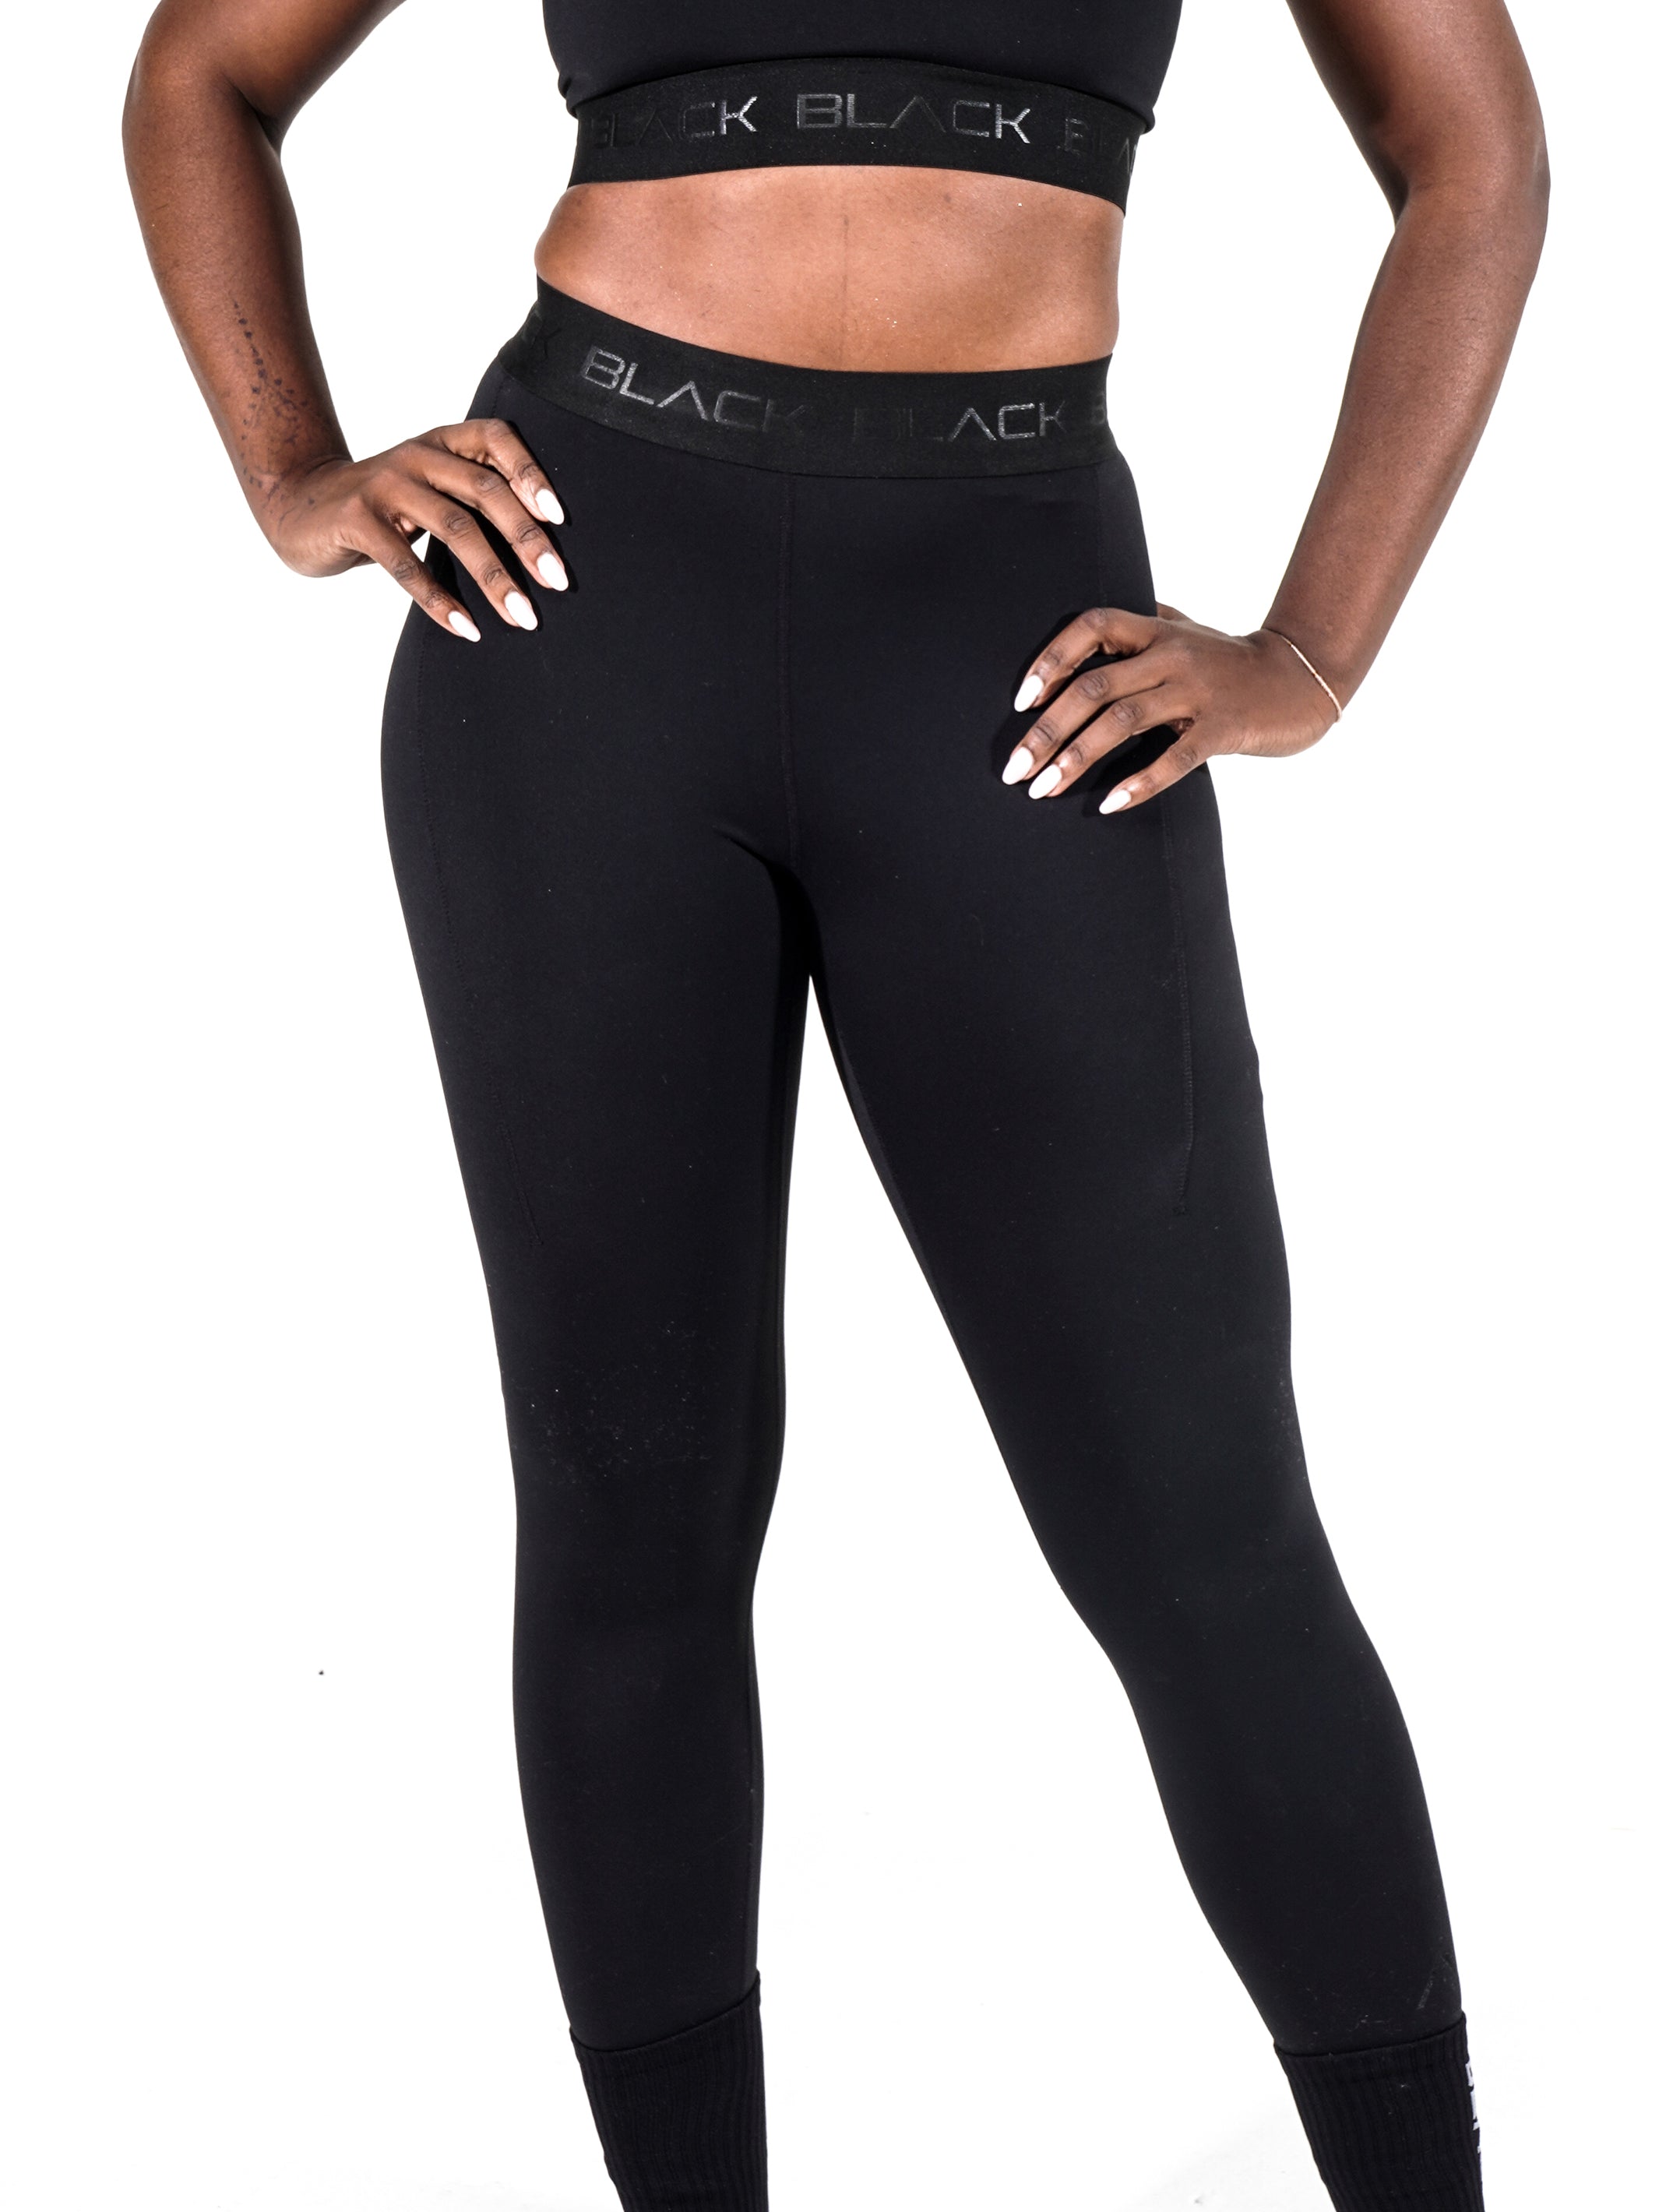 Chapman University Panthers Vive La Fete Collegiate Large Logo on Thigh  Women Black Yoga Leggings 2.5 Waist Tights